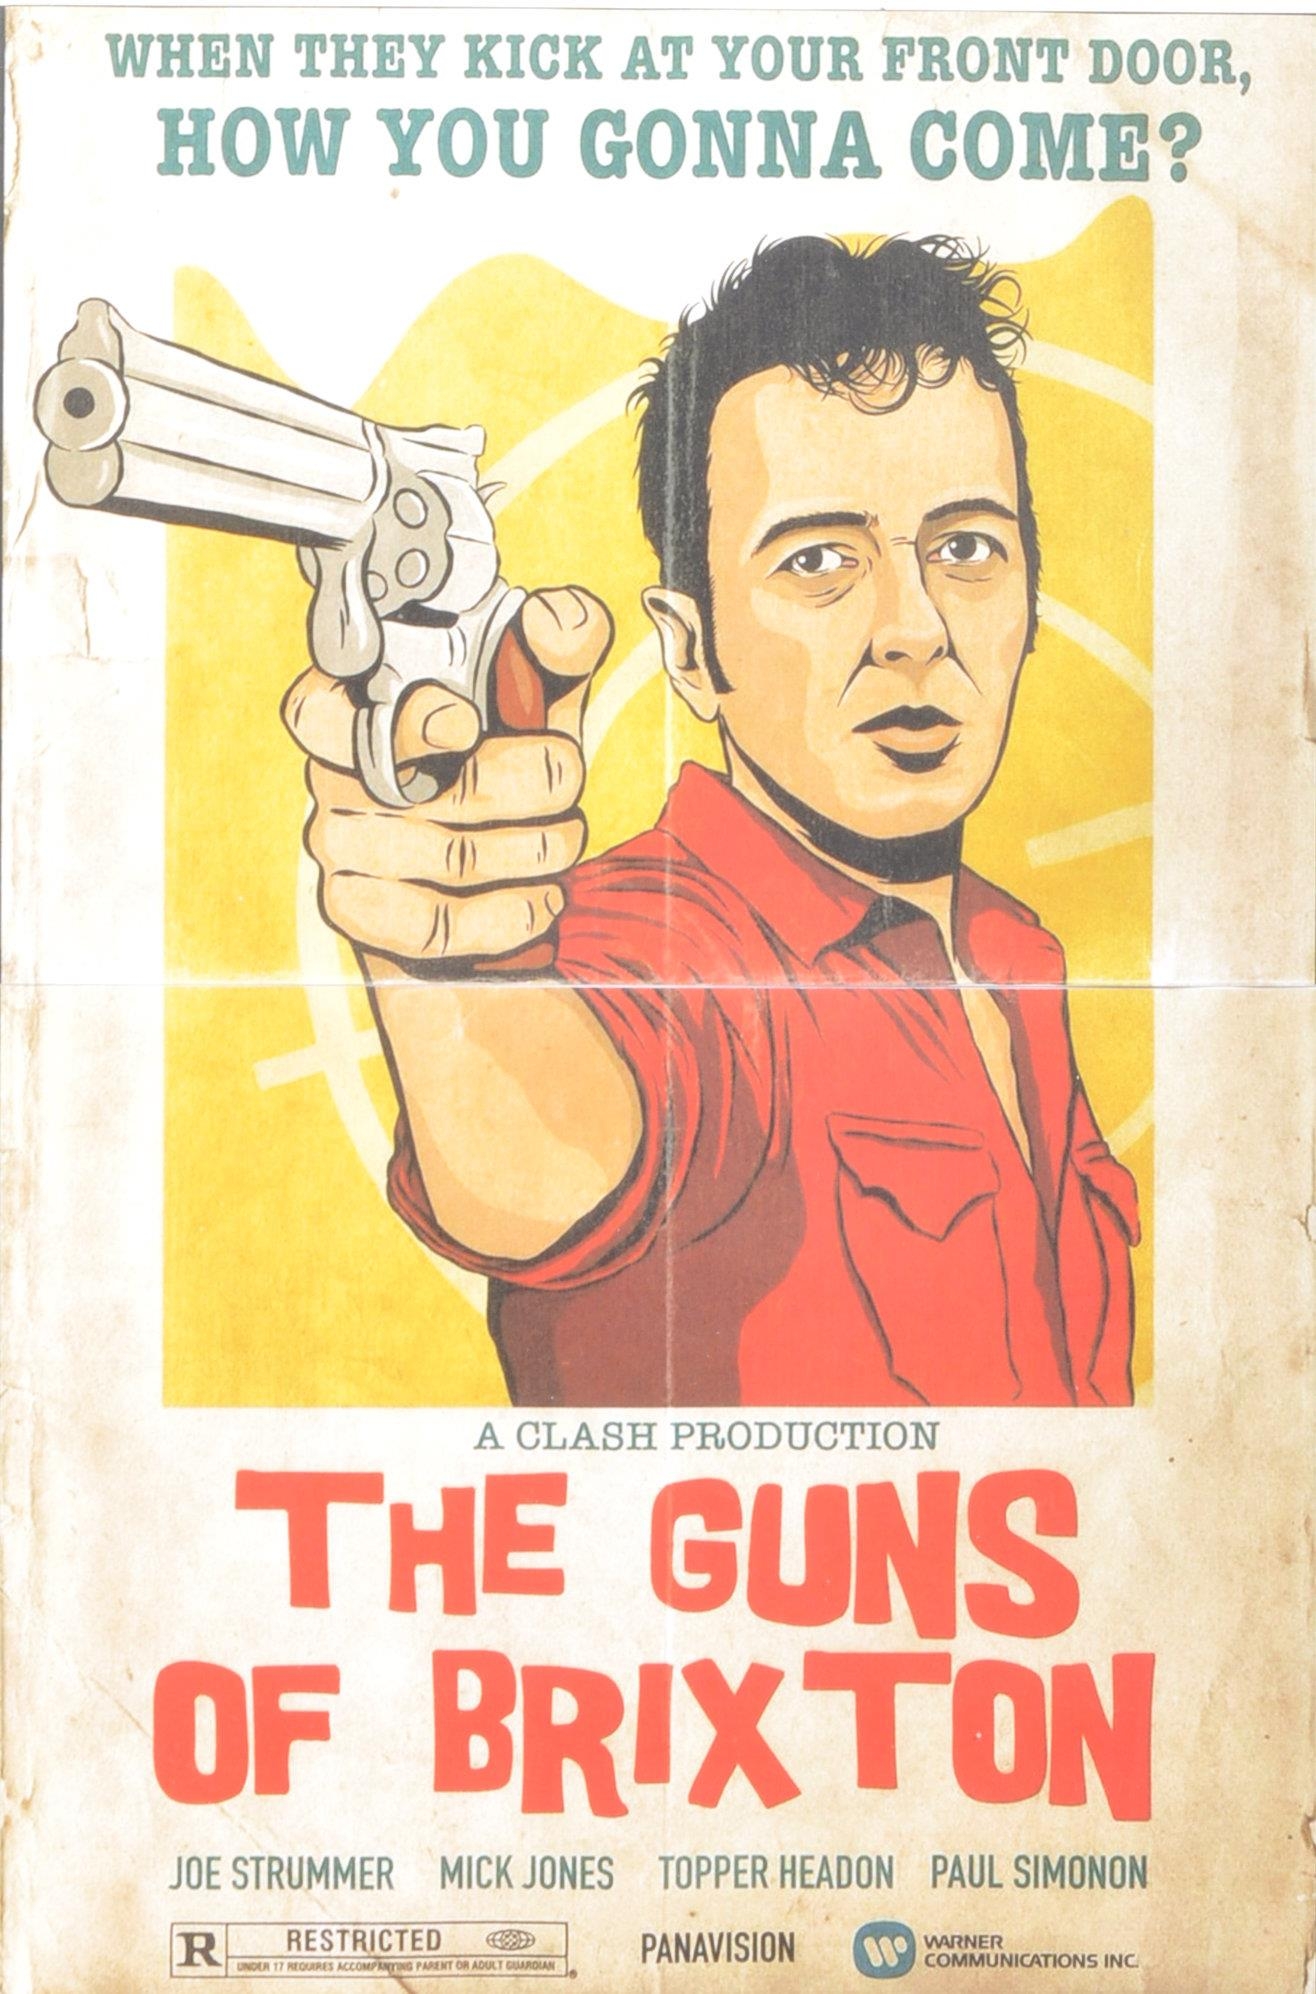 The Guns Of Brixton - The Clash - A 20th century retro vintage